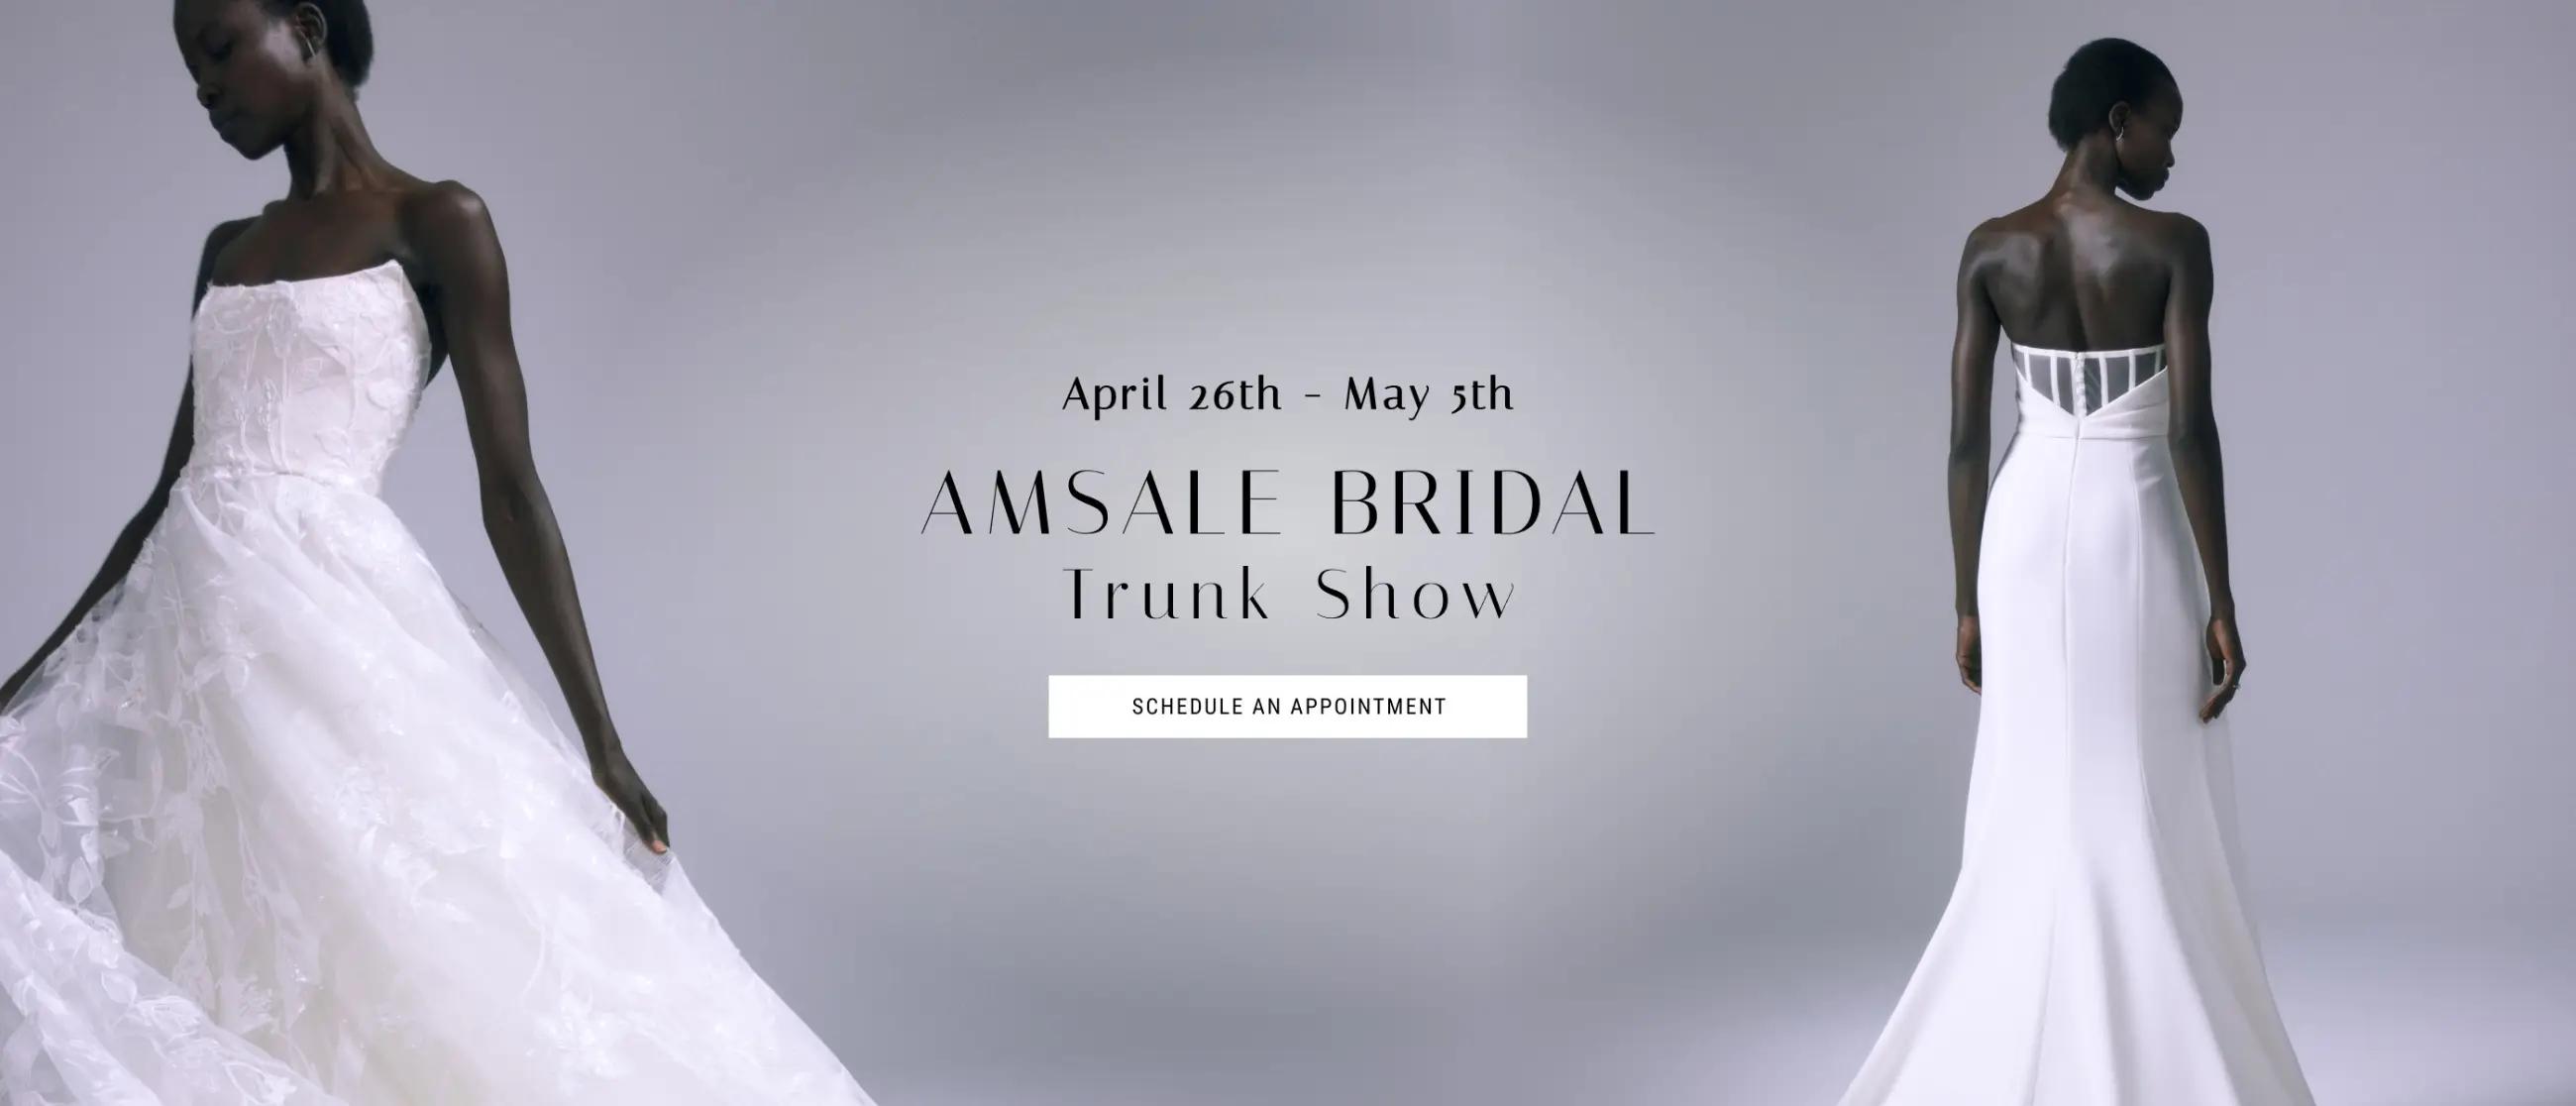 Amsale Bridal Trunk Show Banner